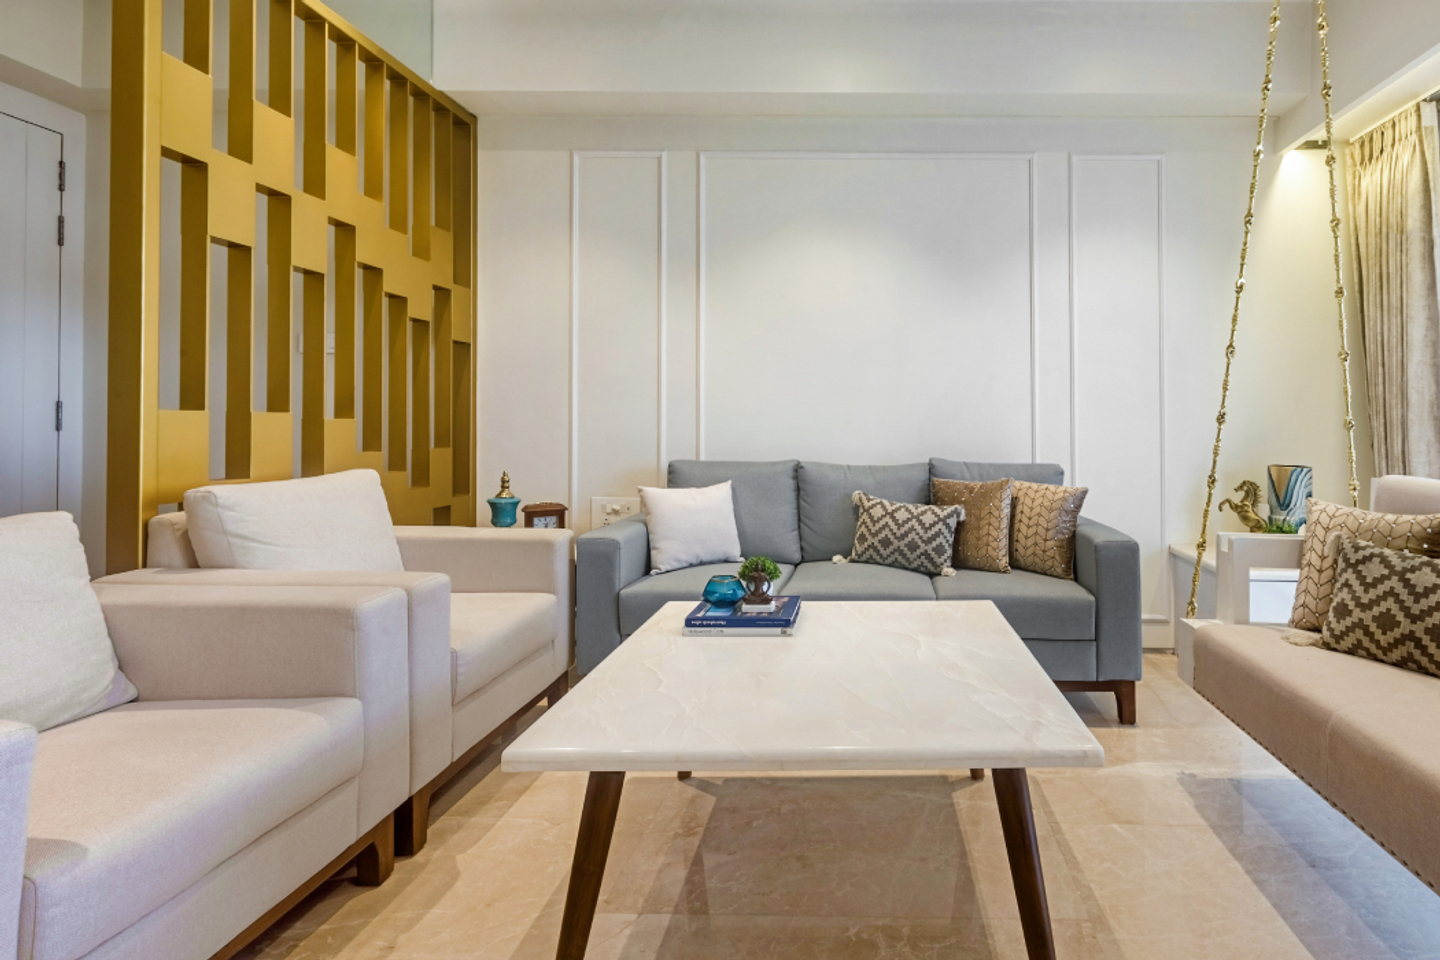 Living Room Design For Large Families - Livspace